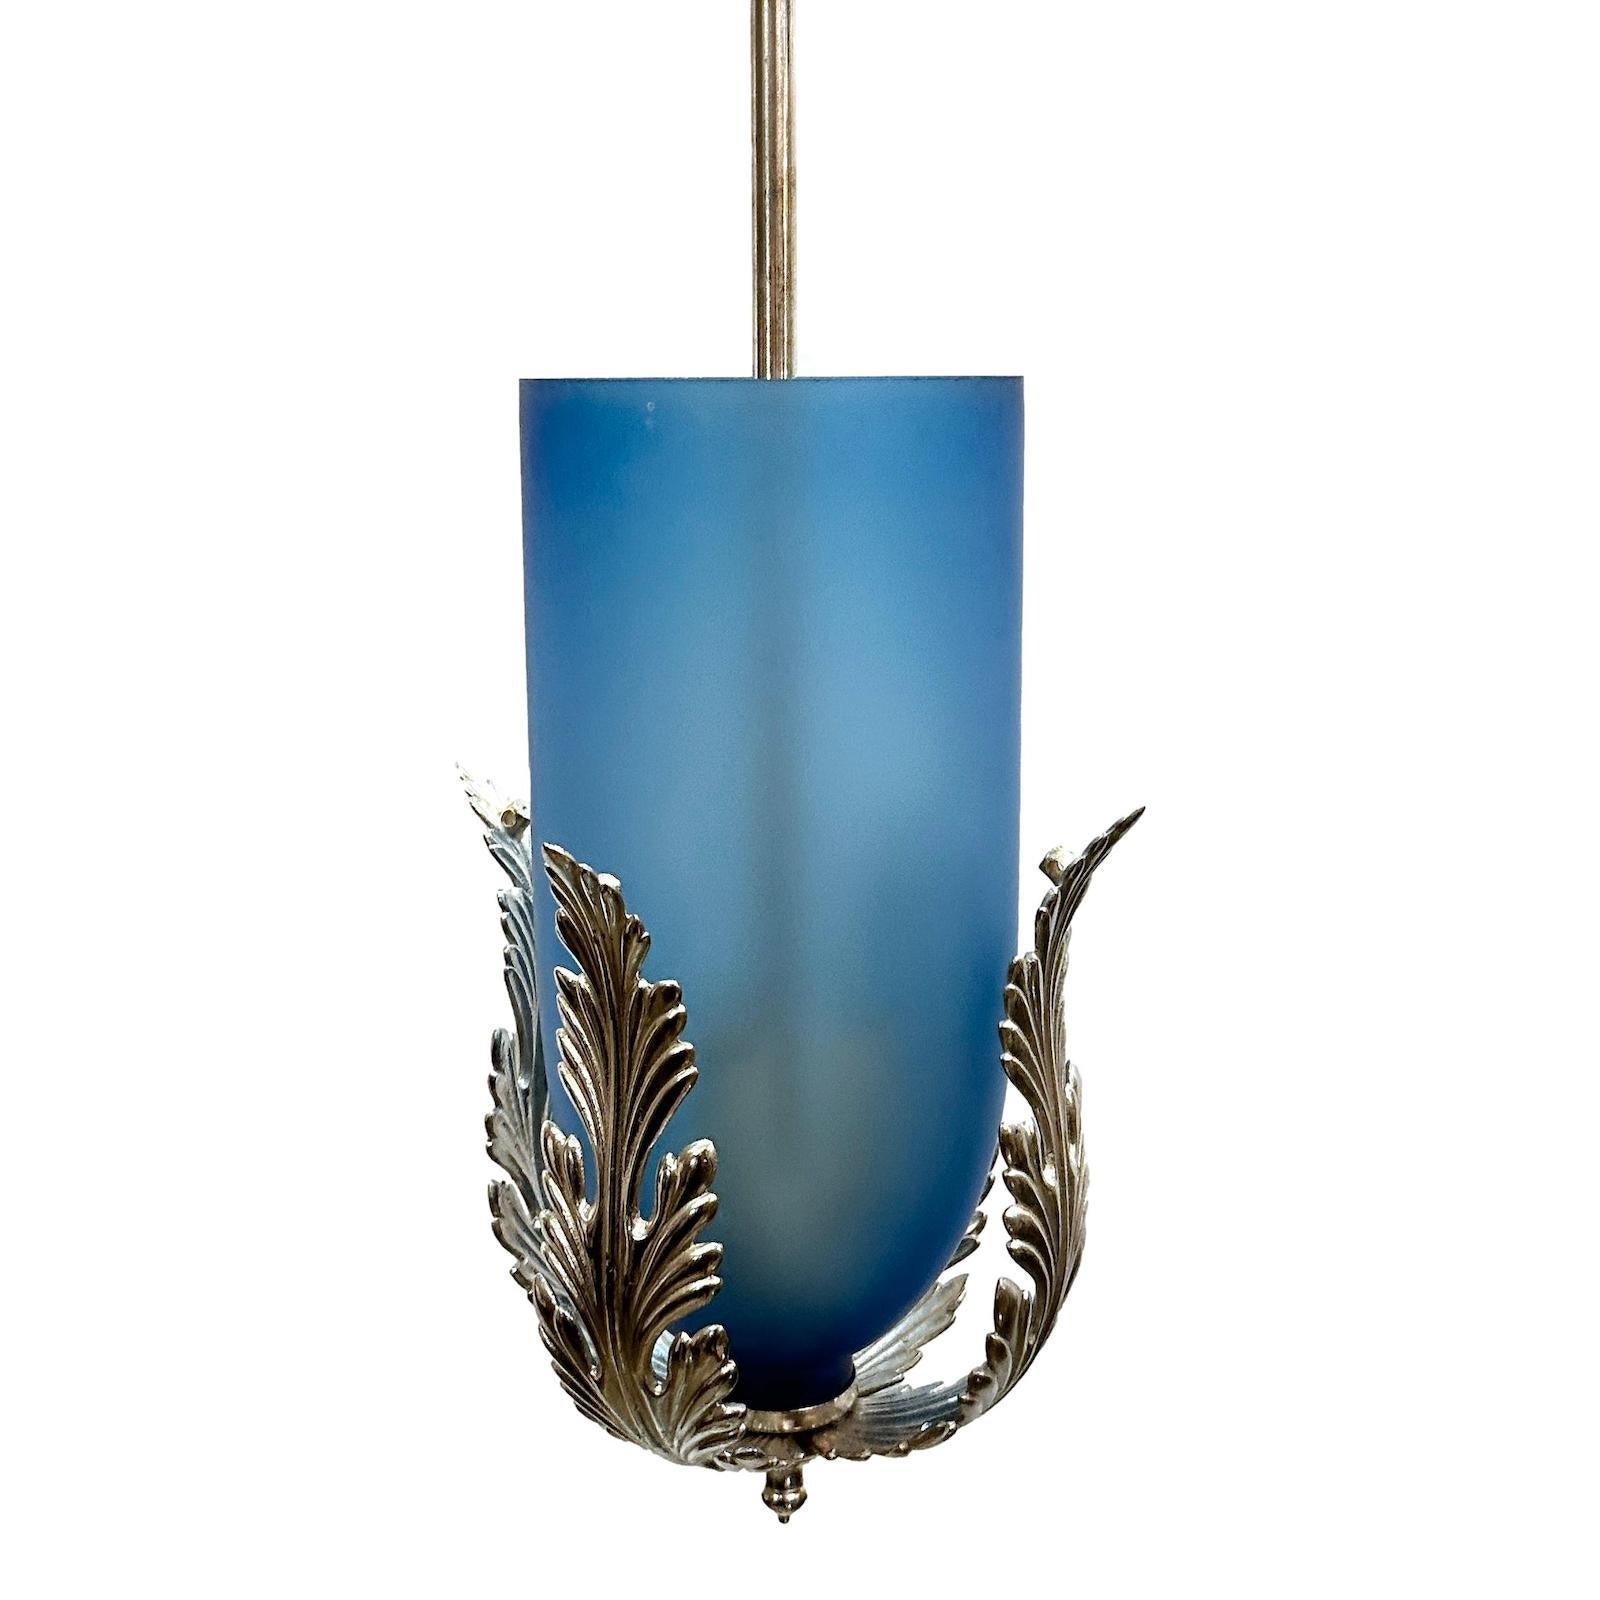 A circa 1950's Italian blown glass lantern with blue glass.

Measurements:
Minimum drop: 21